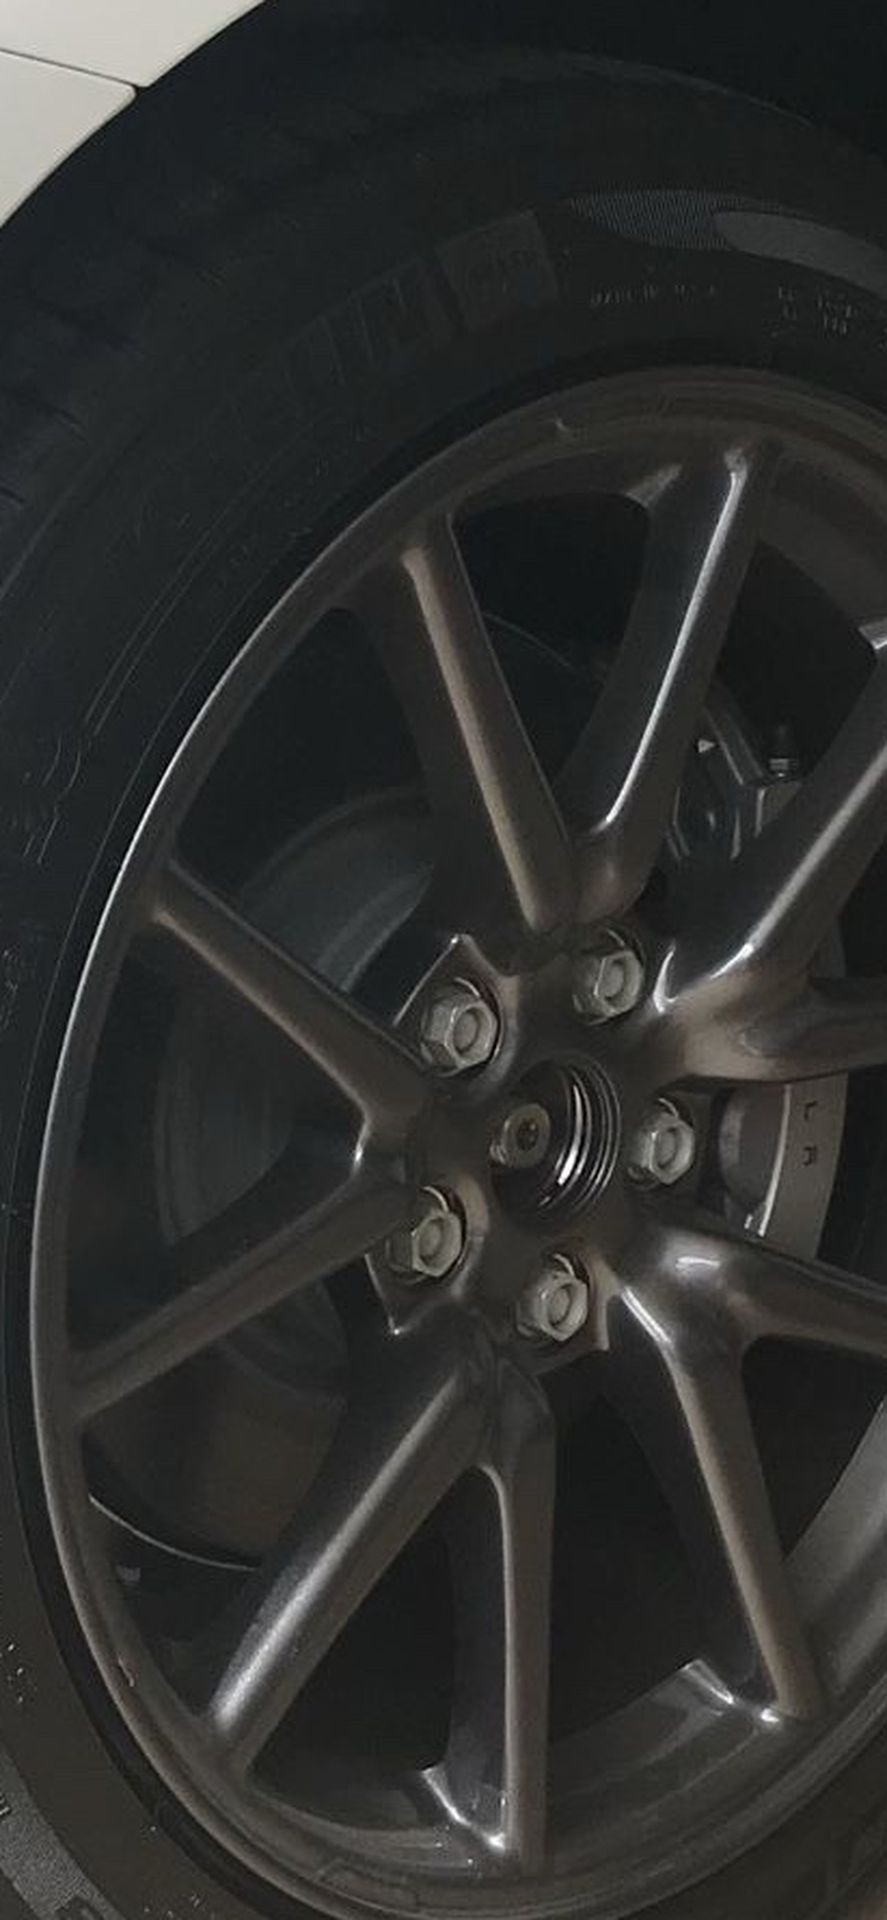 Tesla Aero Wheels, Hub Caps and tires